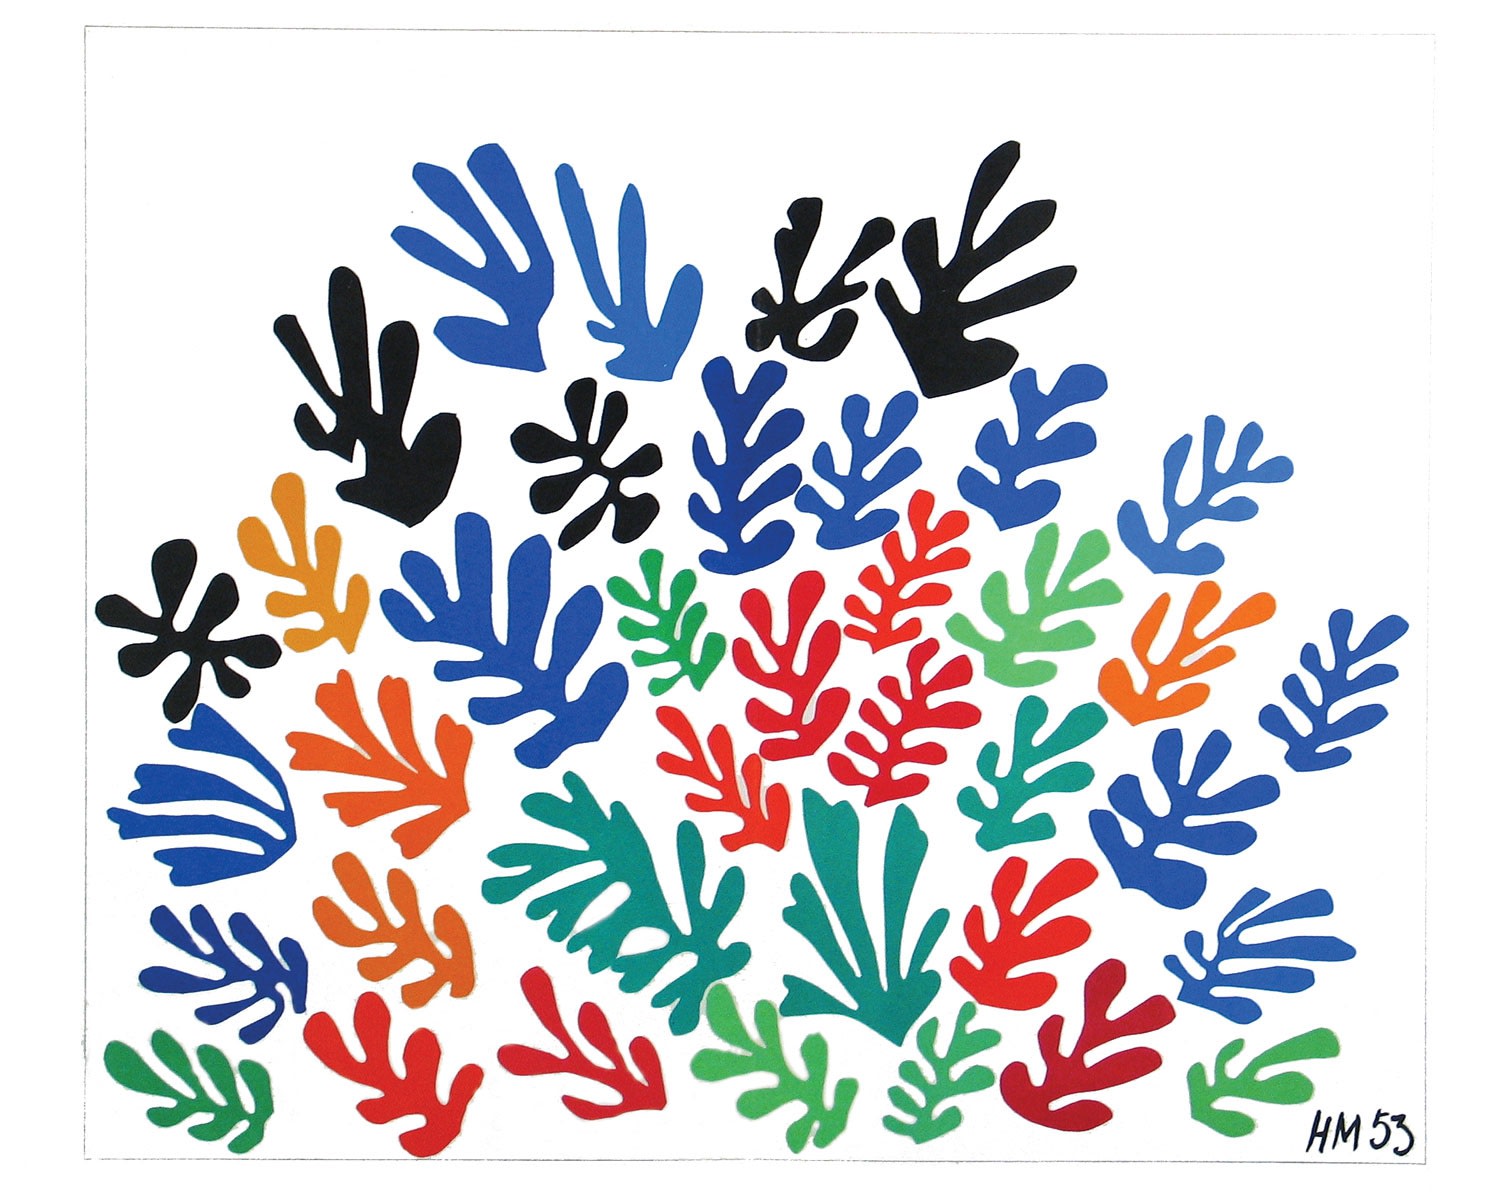 Henri Matisse, La Gerbe, 1954